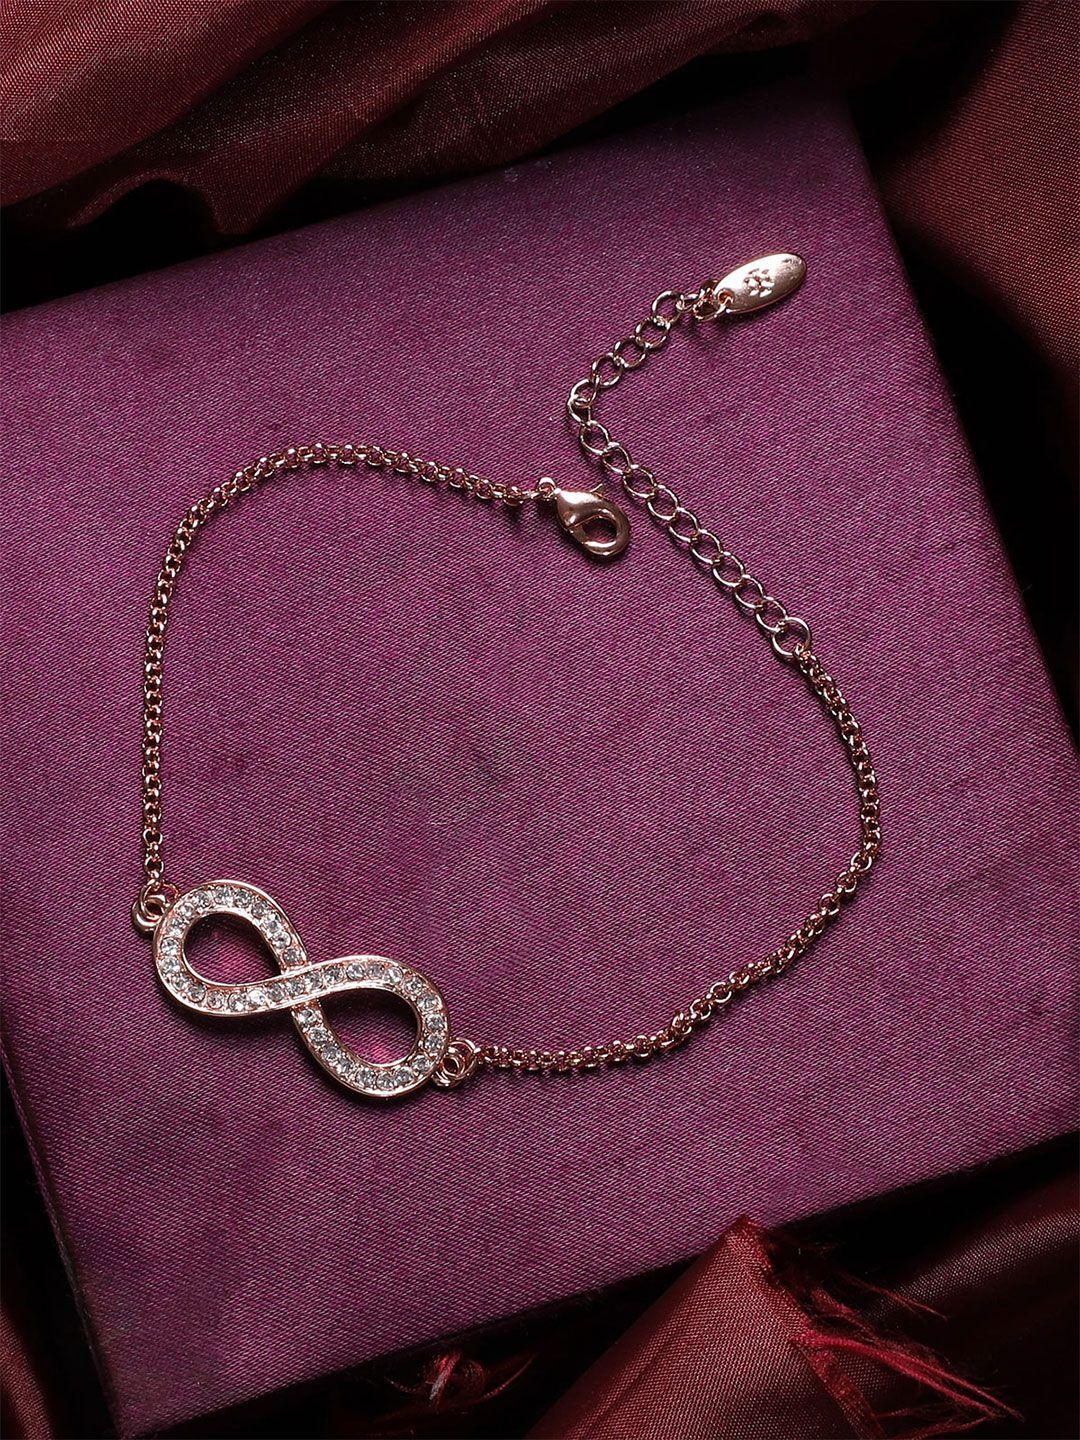 aquastreet women rose gold-toned infinity design charm bracelet